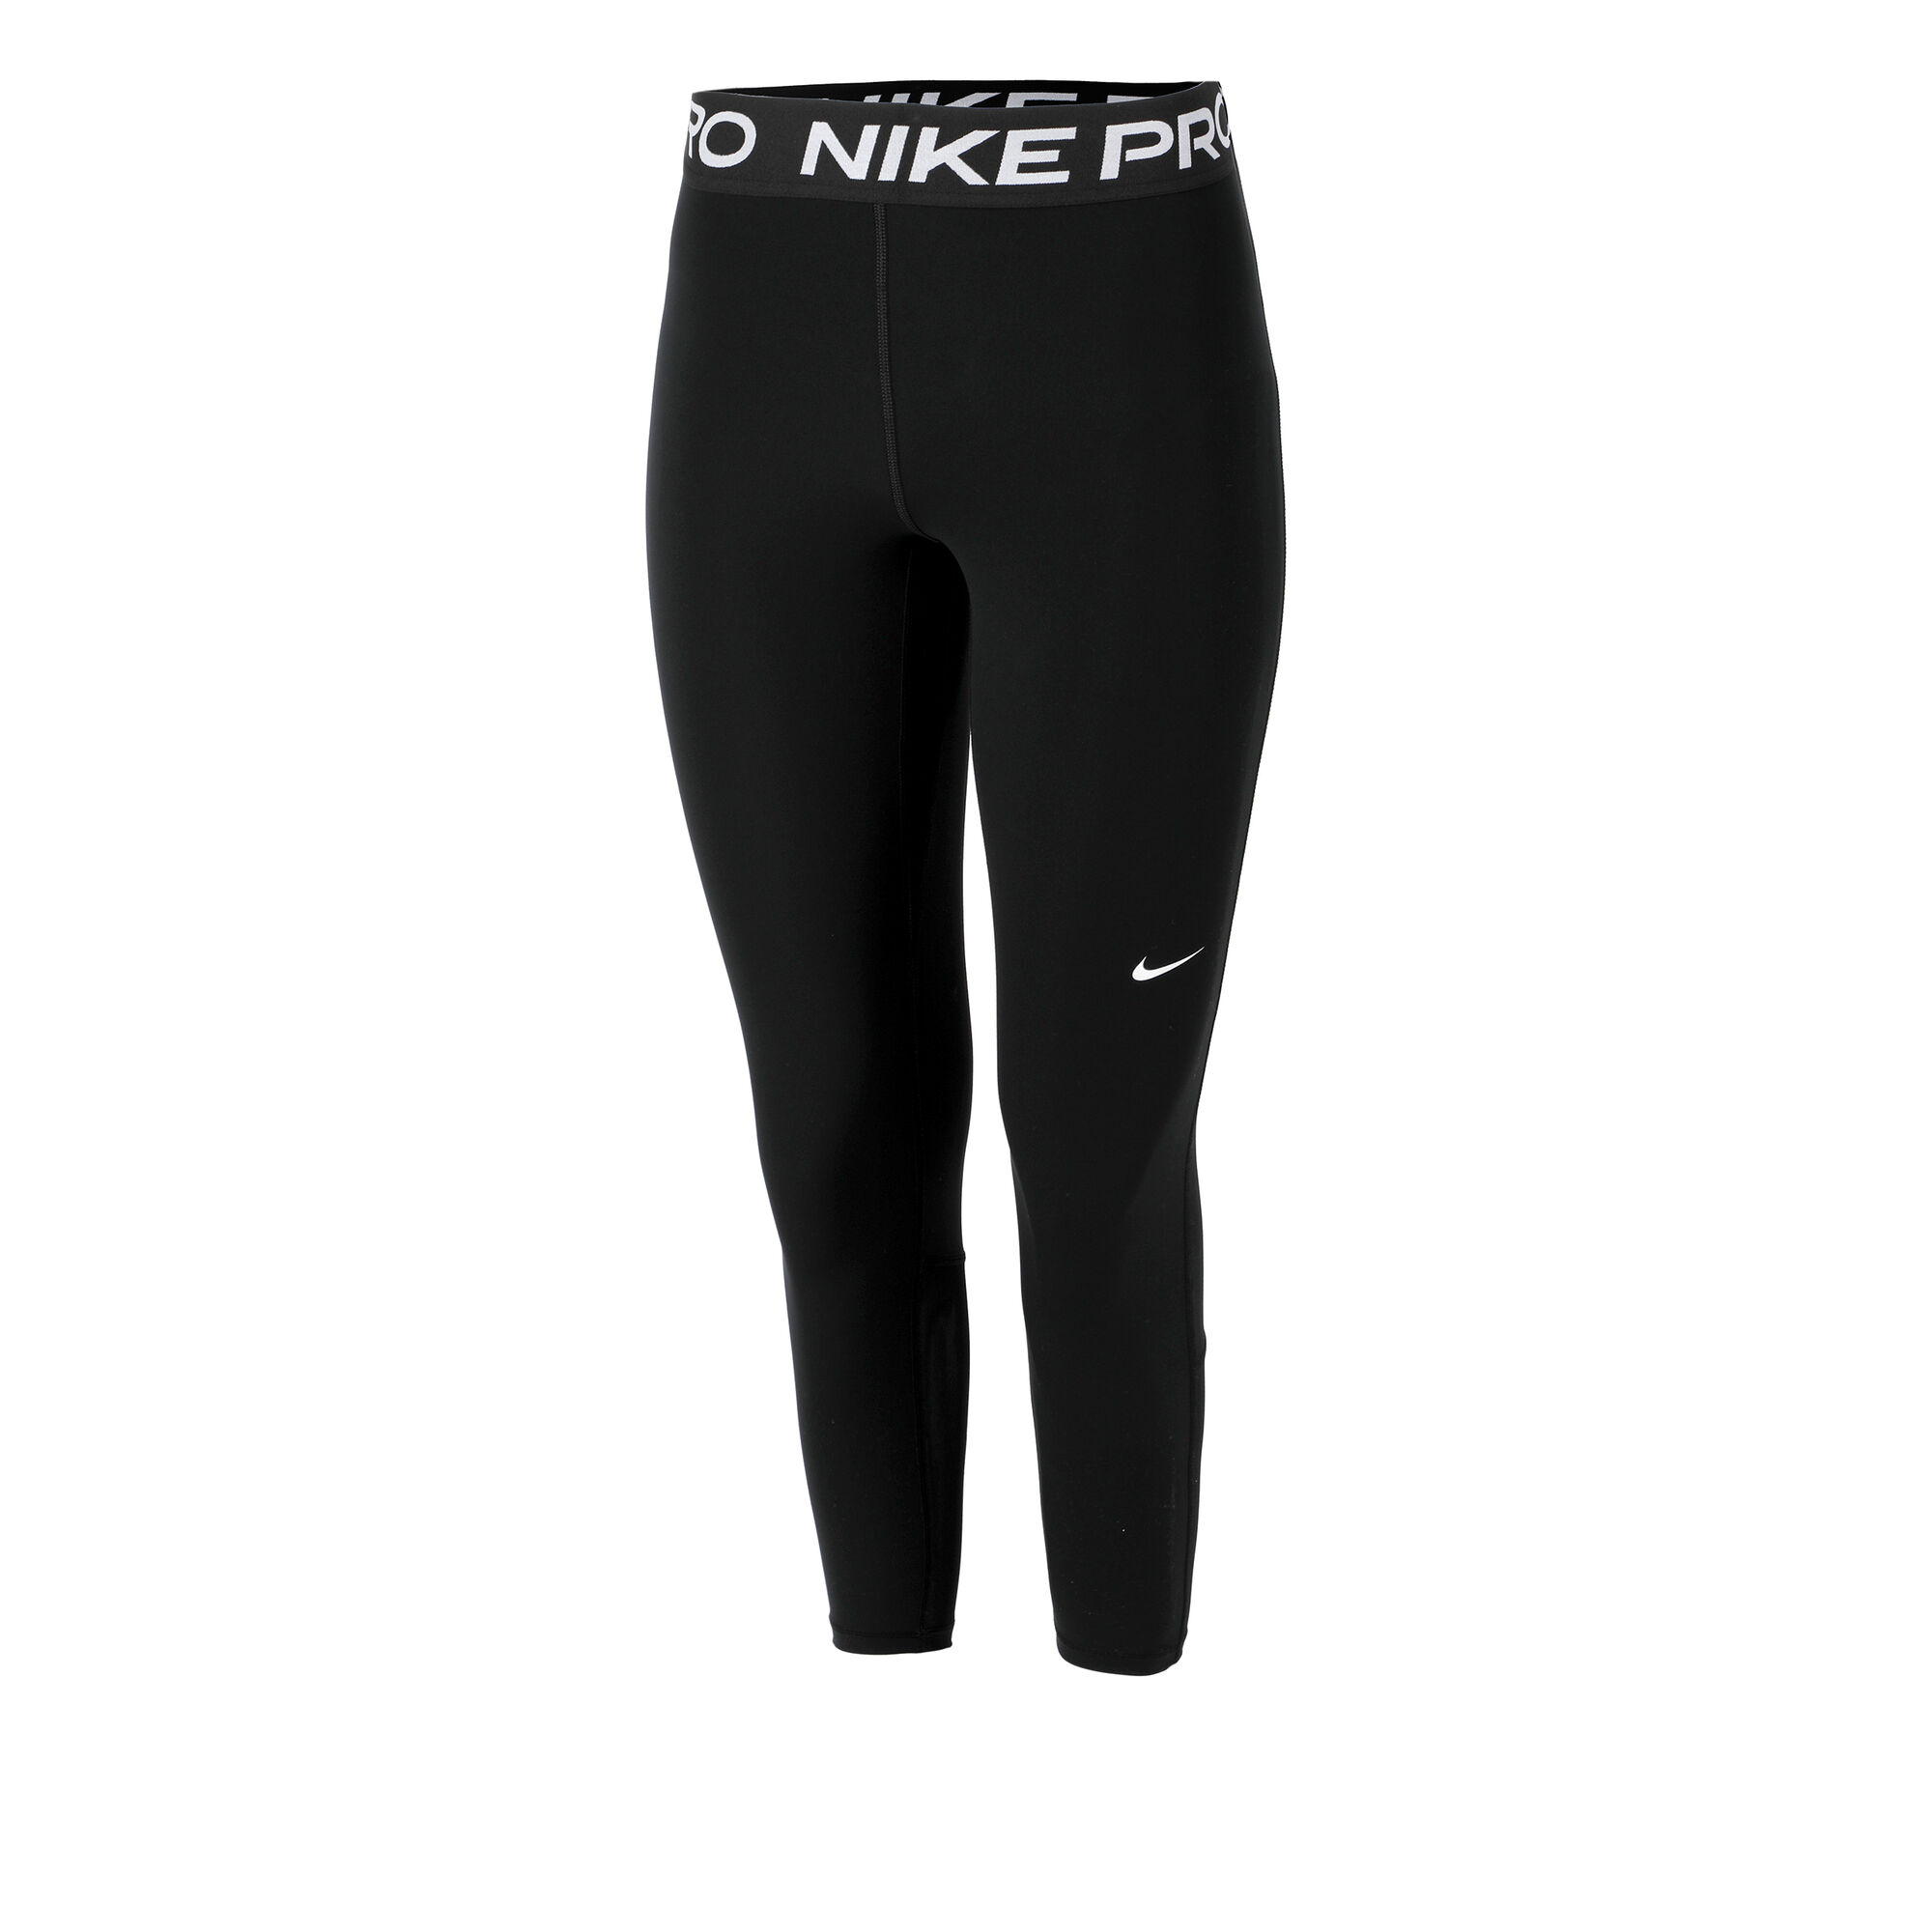 Buy Nike Pro 365 3/4 Tight Women Black, White online